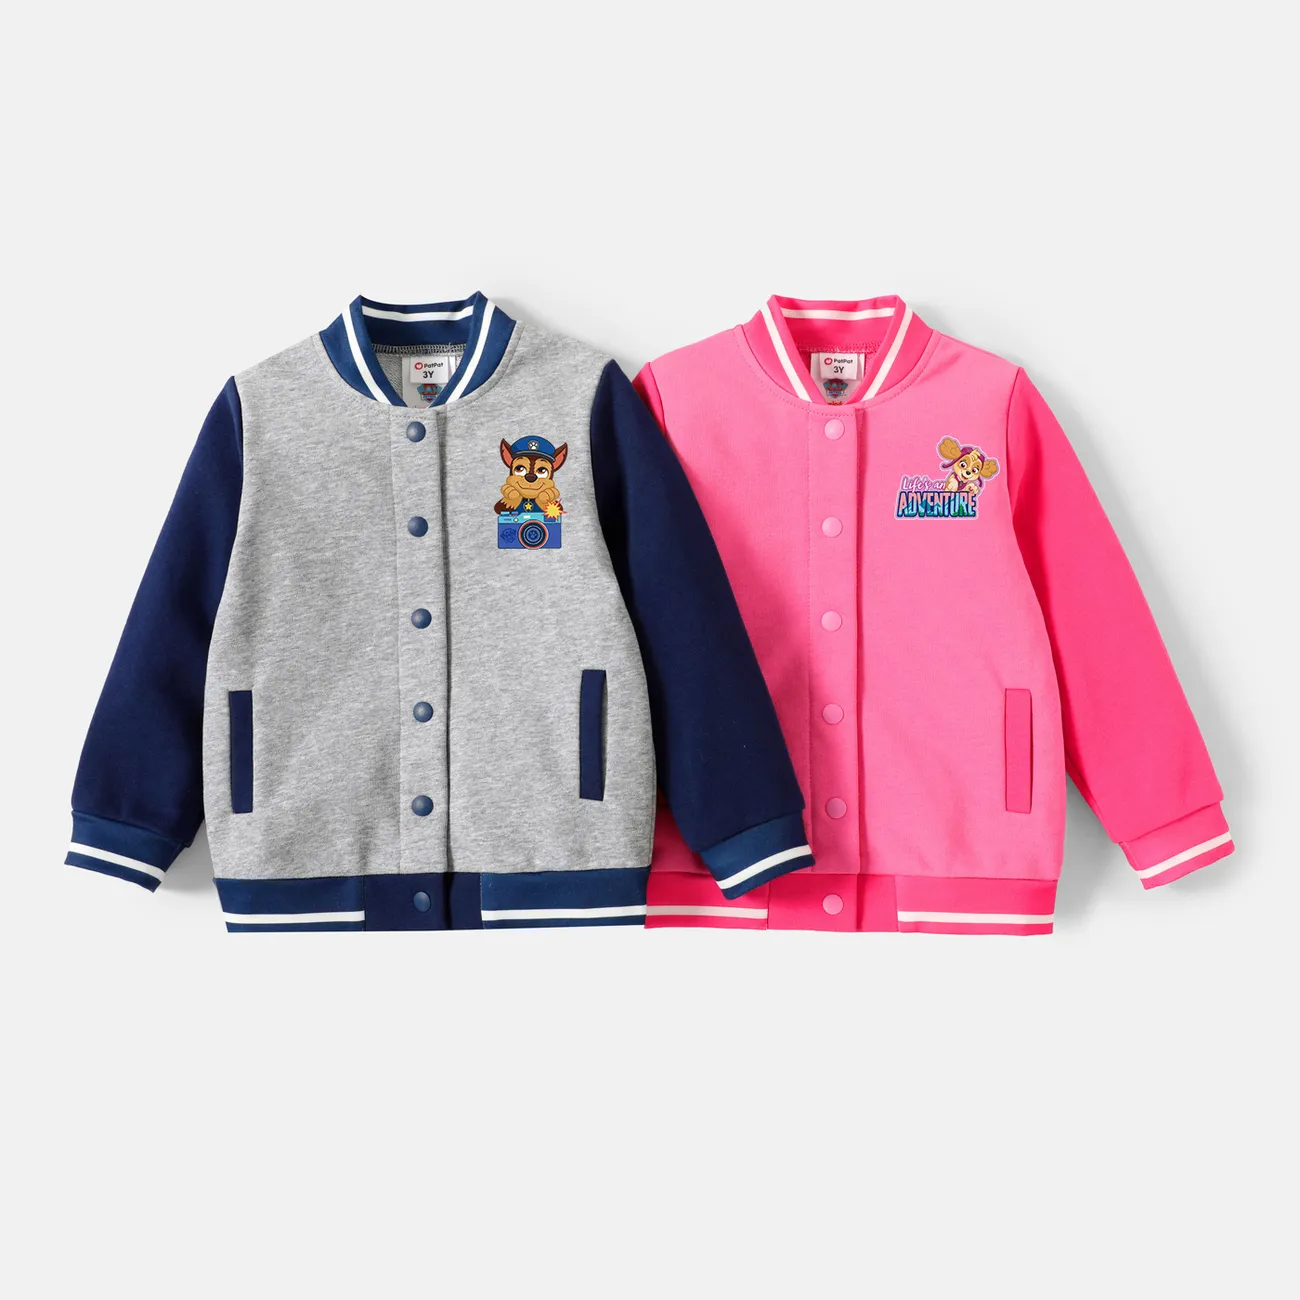 PAW Patrol Toddler Boy/Girl Front Buttons Cotton Jacket Pink big image 1